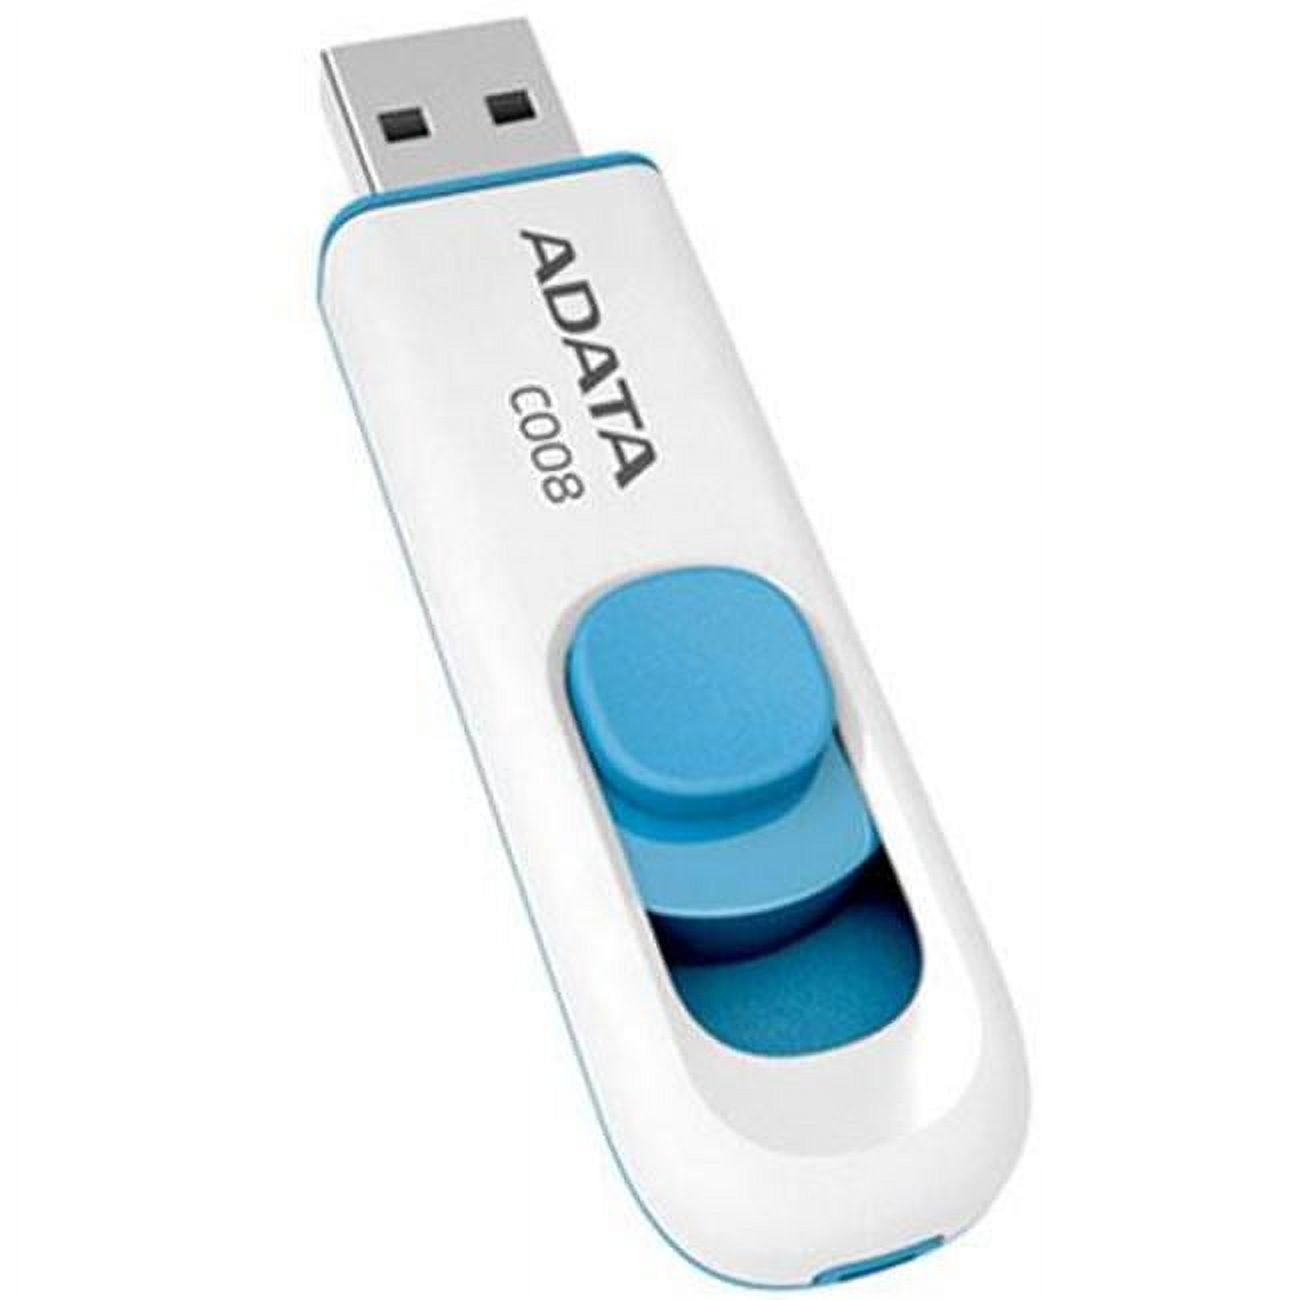 Adata Classic C008 8 GB Flash Drive - White, Blue AC008-8G-RWE - image 1 of 2